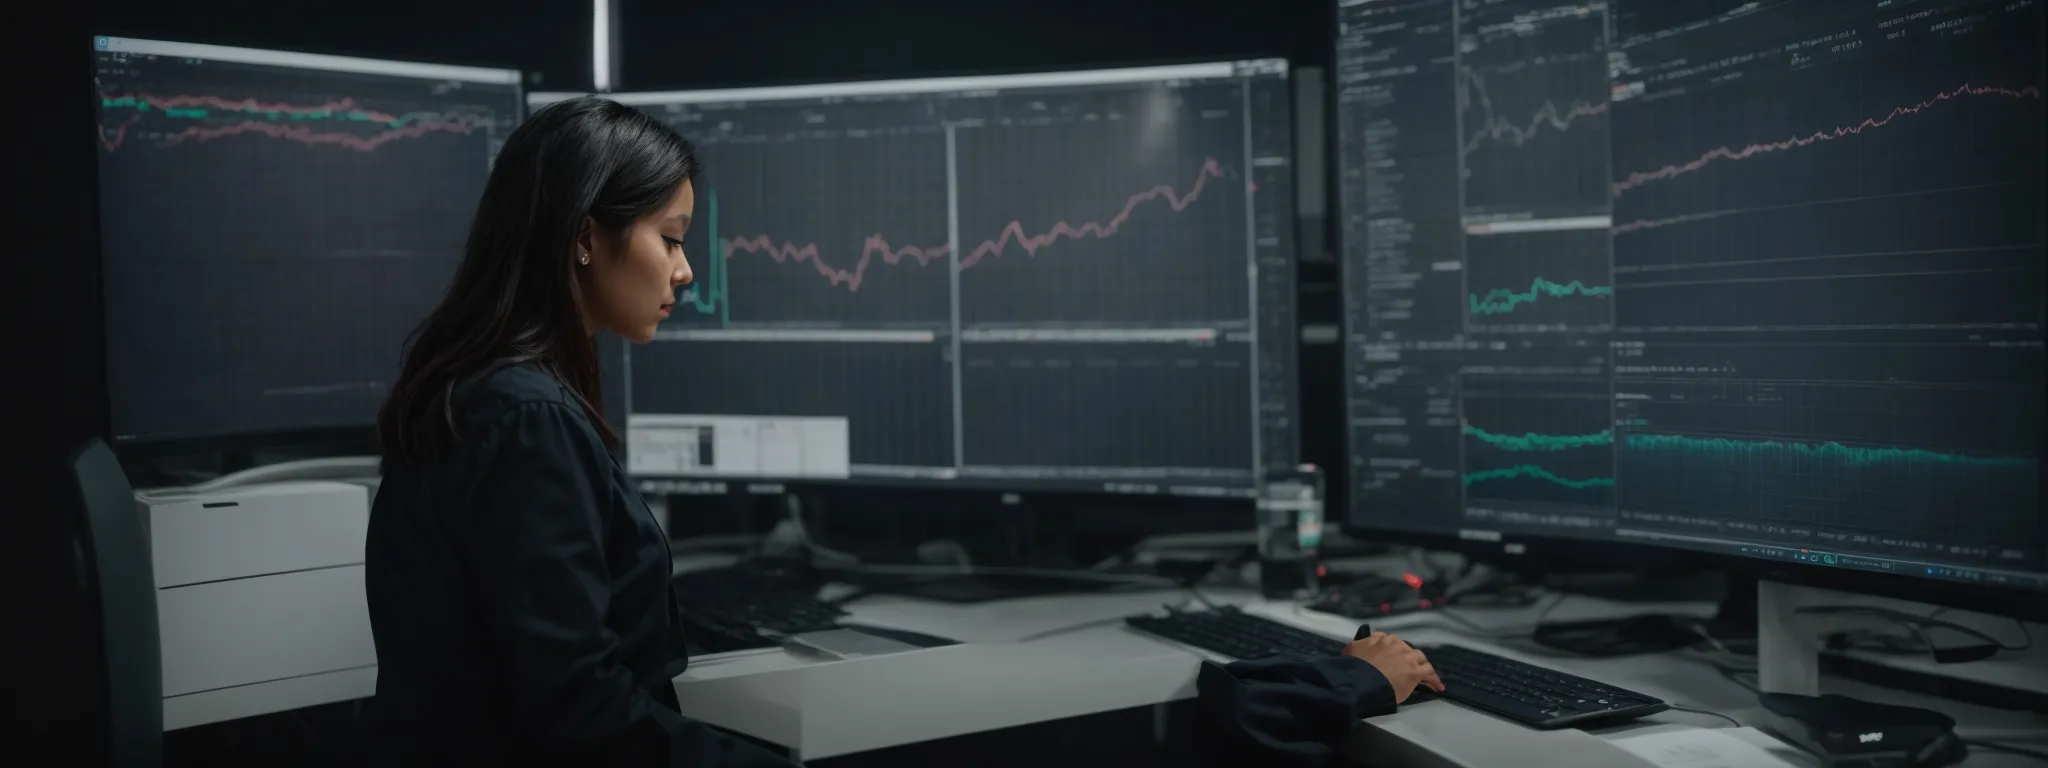 a woman at a computer analyzes complex graphs on digital marketing analytics.